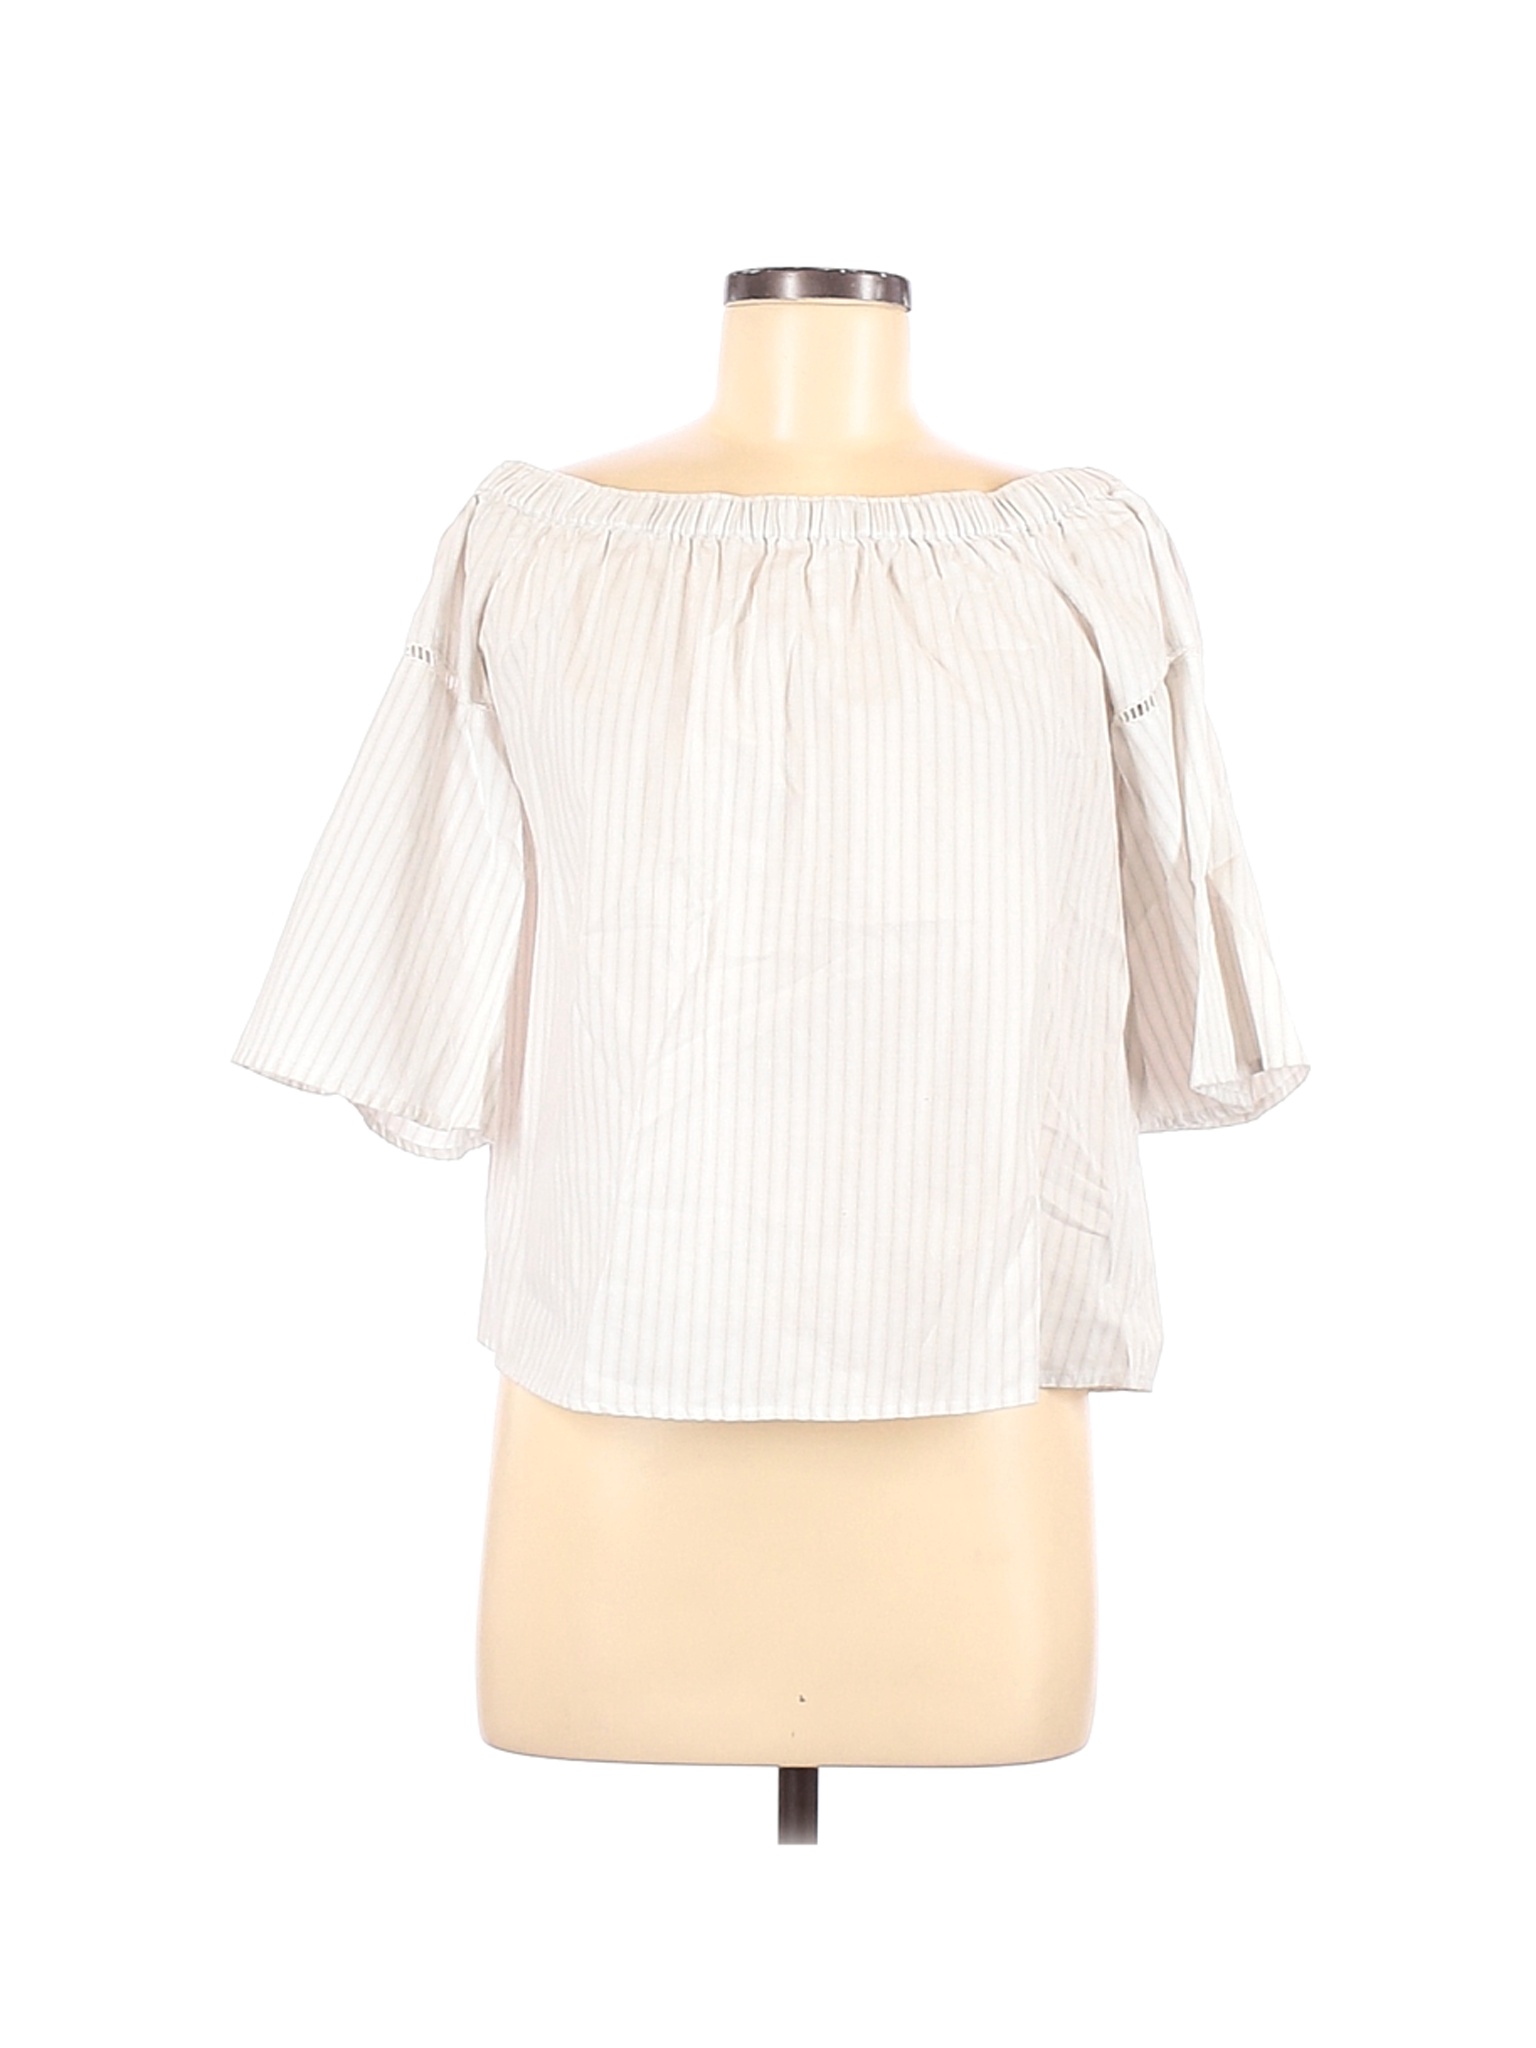 Abercrombie & Fitch Women White Long Sleeve Blouse M | eBay